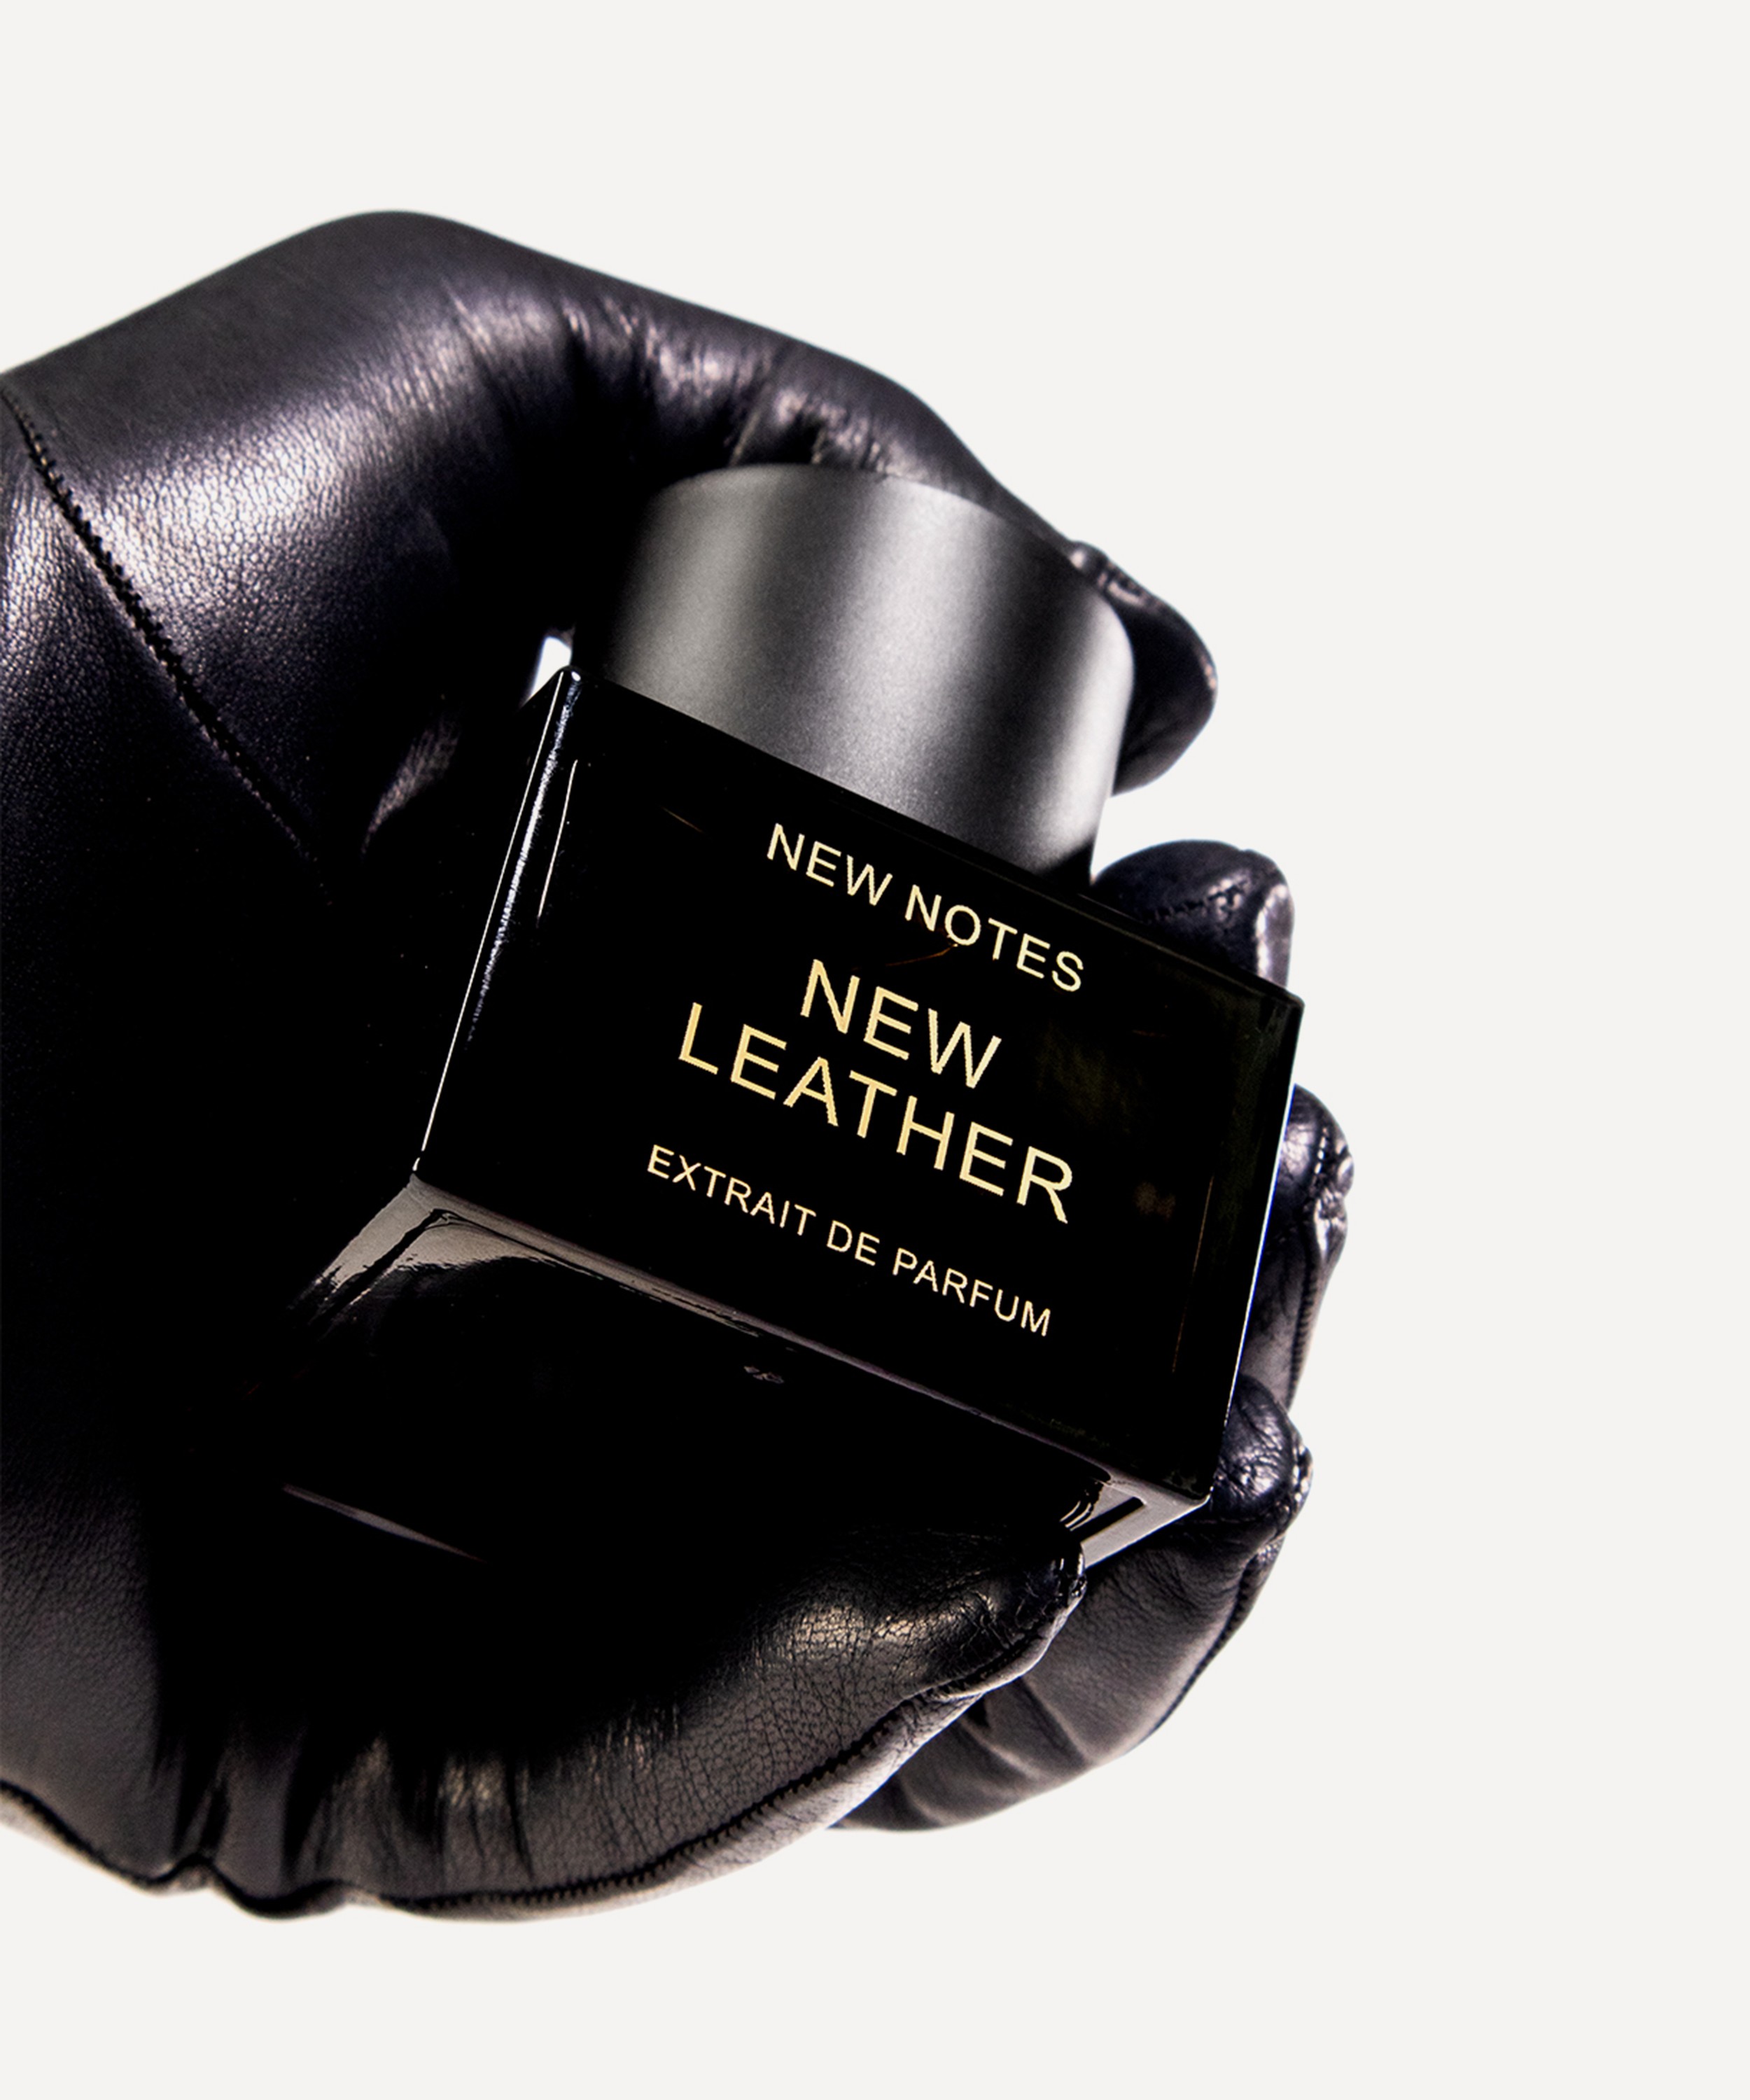 New Notes - New Leather Extrait de Parfum 50ml image number 4